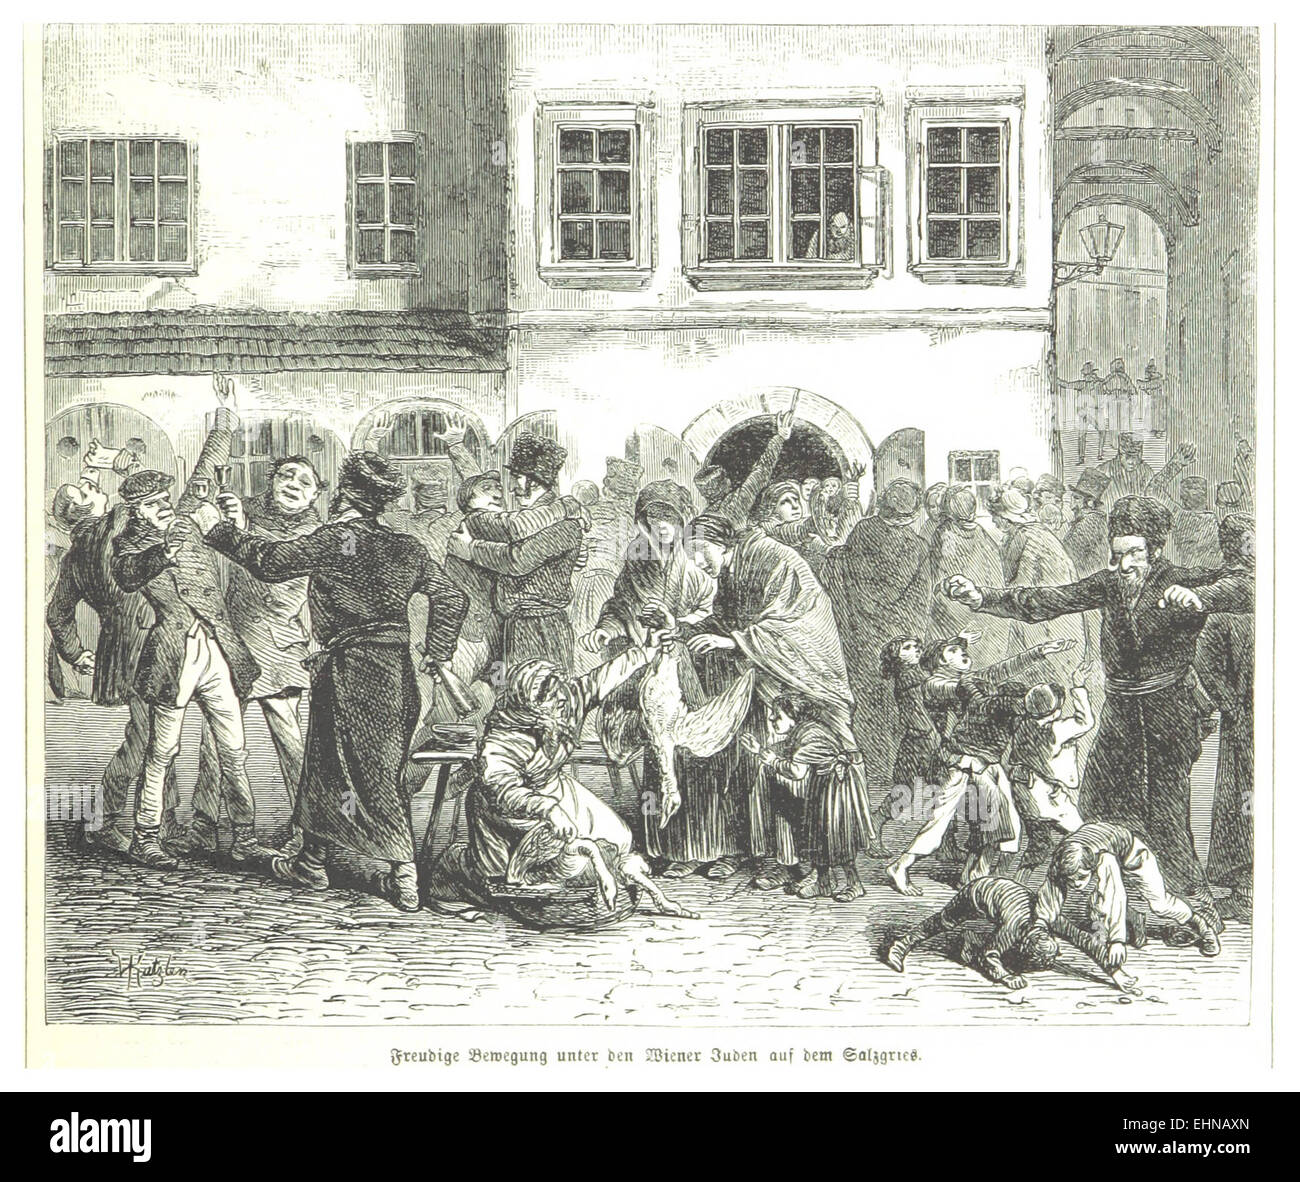 RS(1872) p1.0421 Die Wiener jüdische Bevölkerung feiert Stock Photo